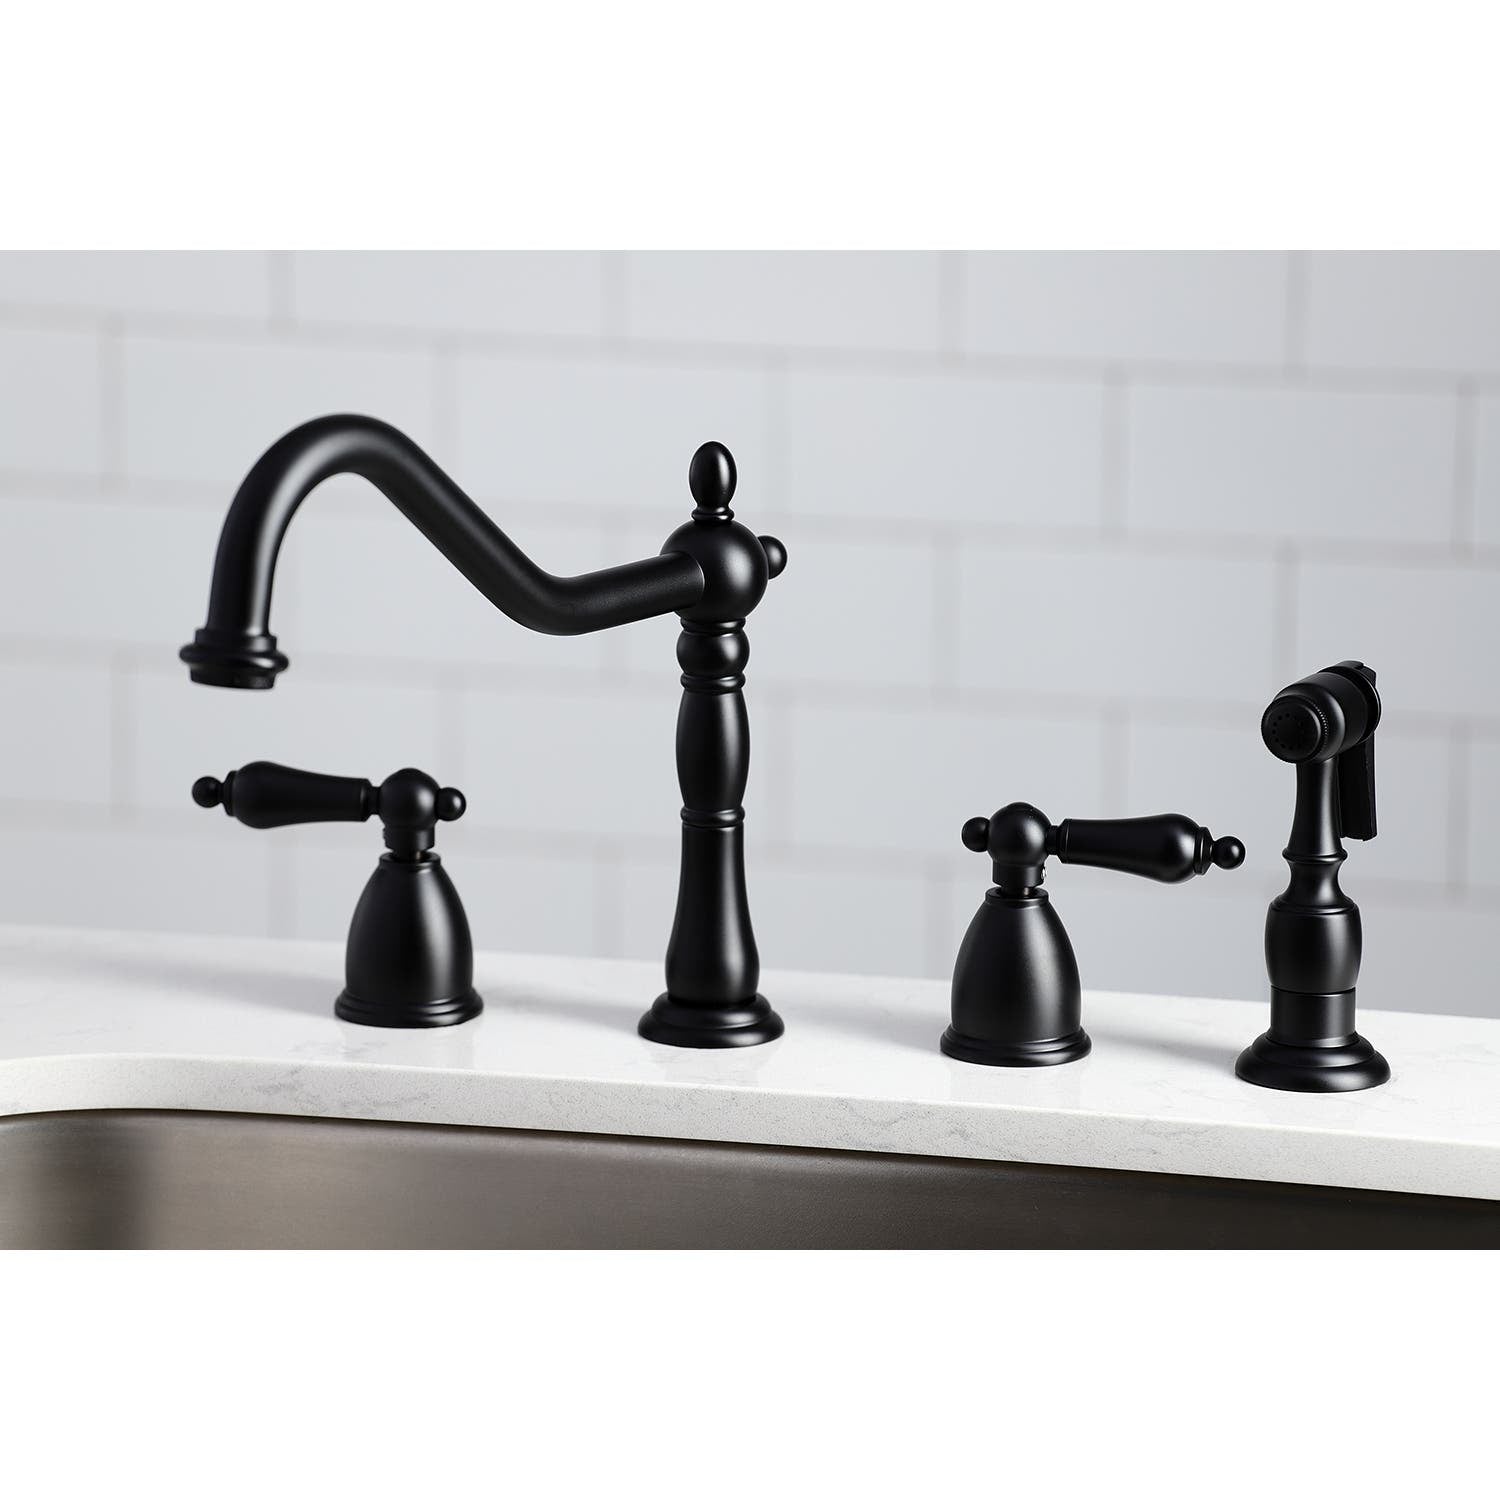 Matte Black Widespread Kitchen Faucet Feature: KB1790ALBS